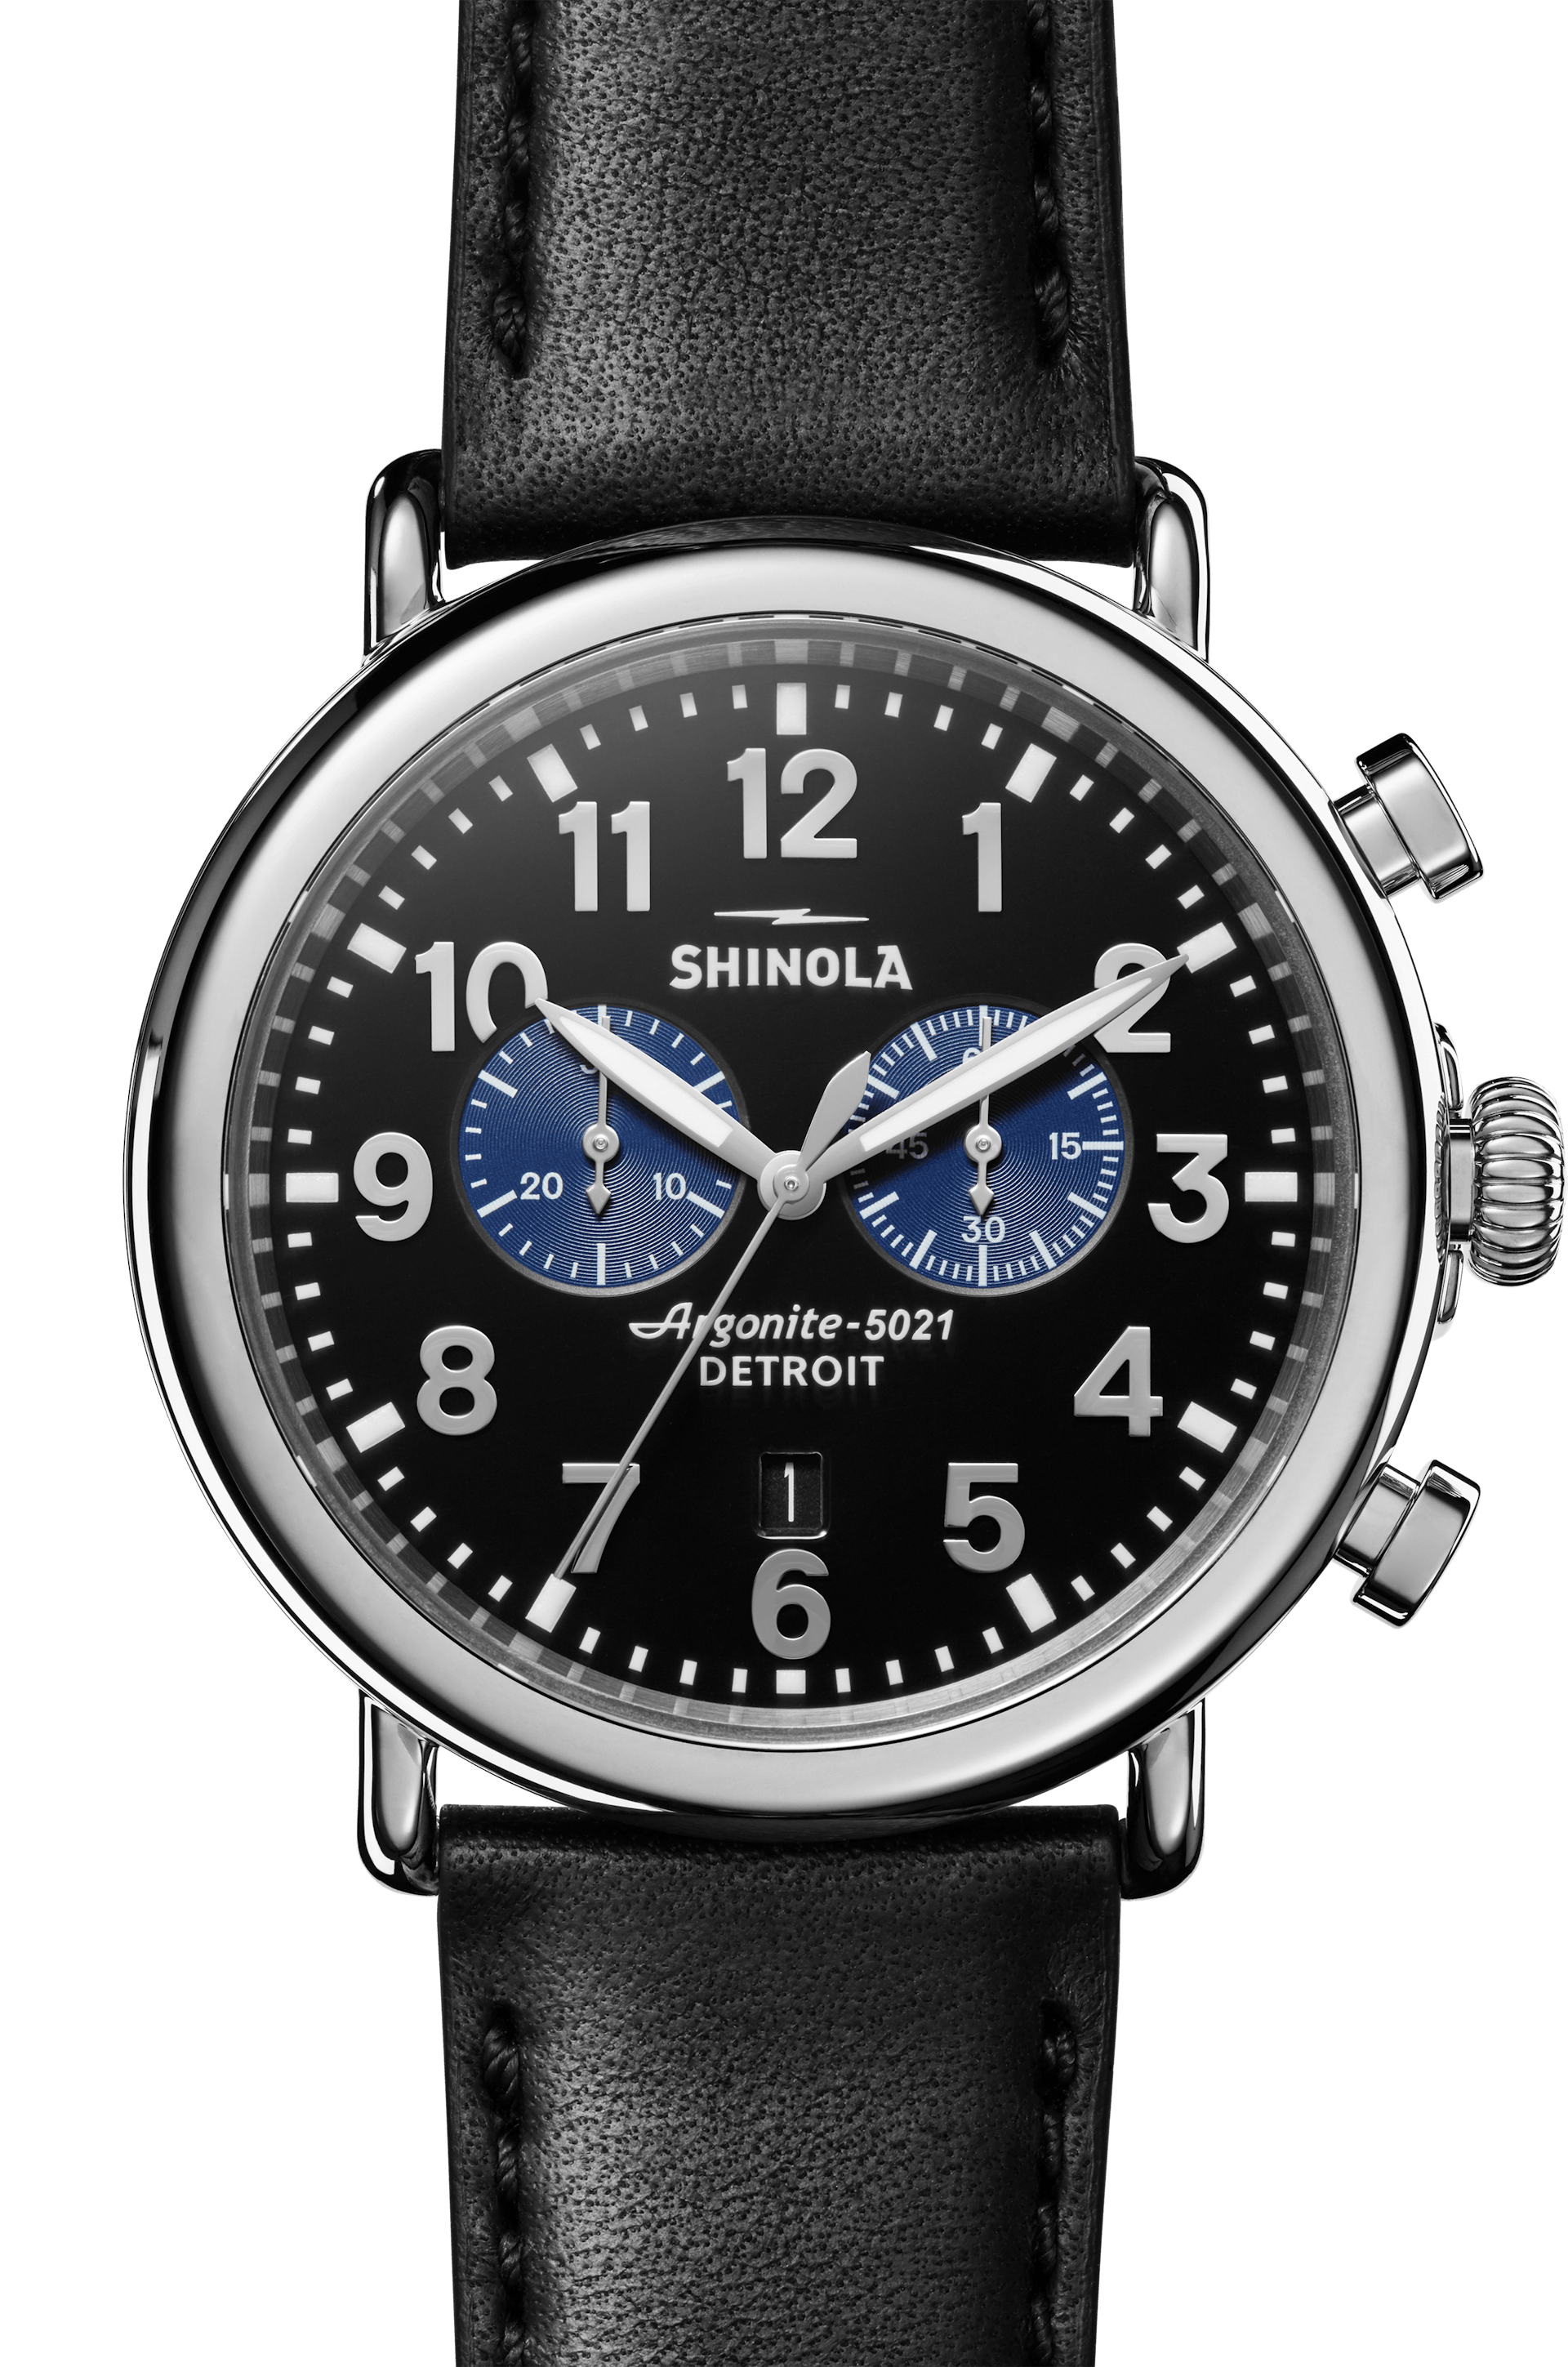 Watch of the Week: Shinola's The Runwell | GQ